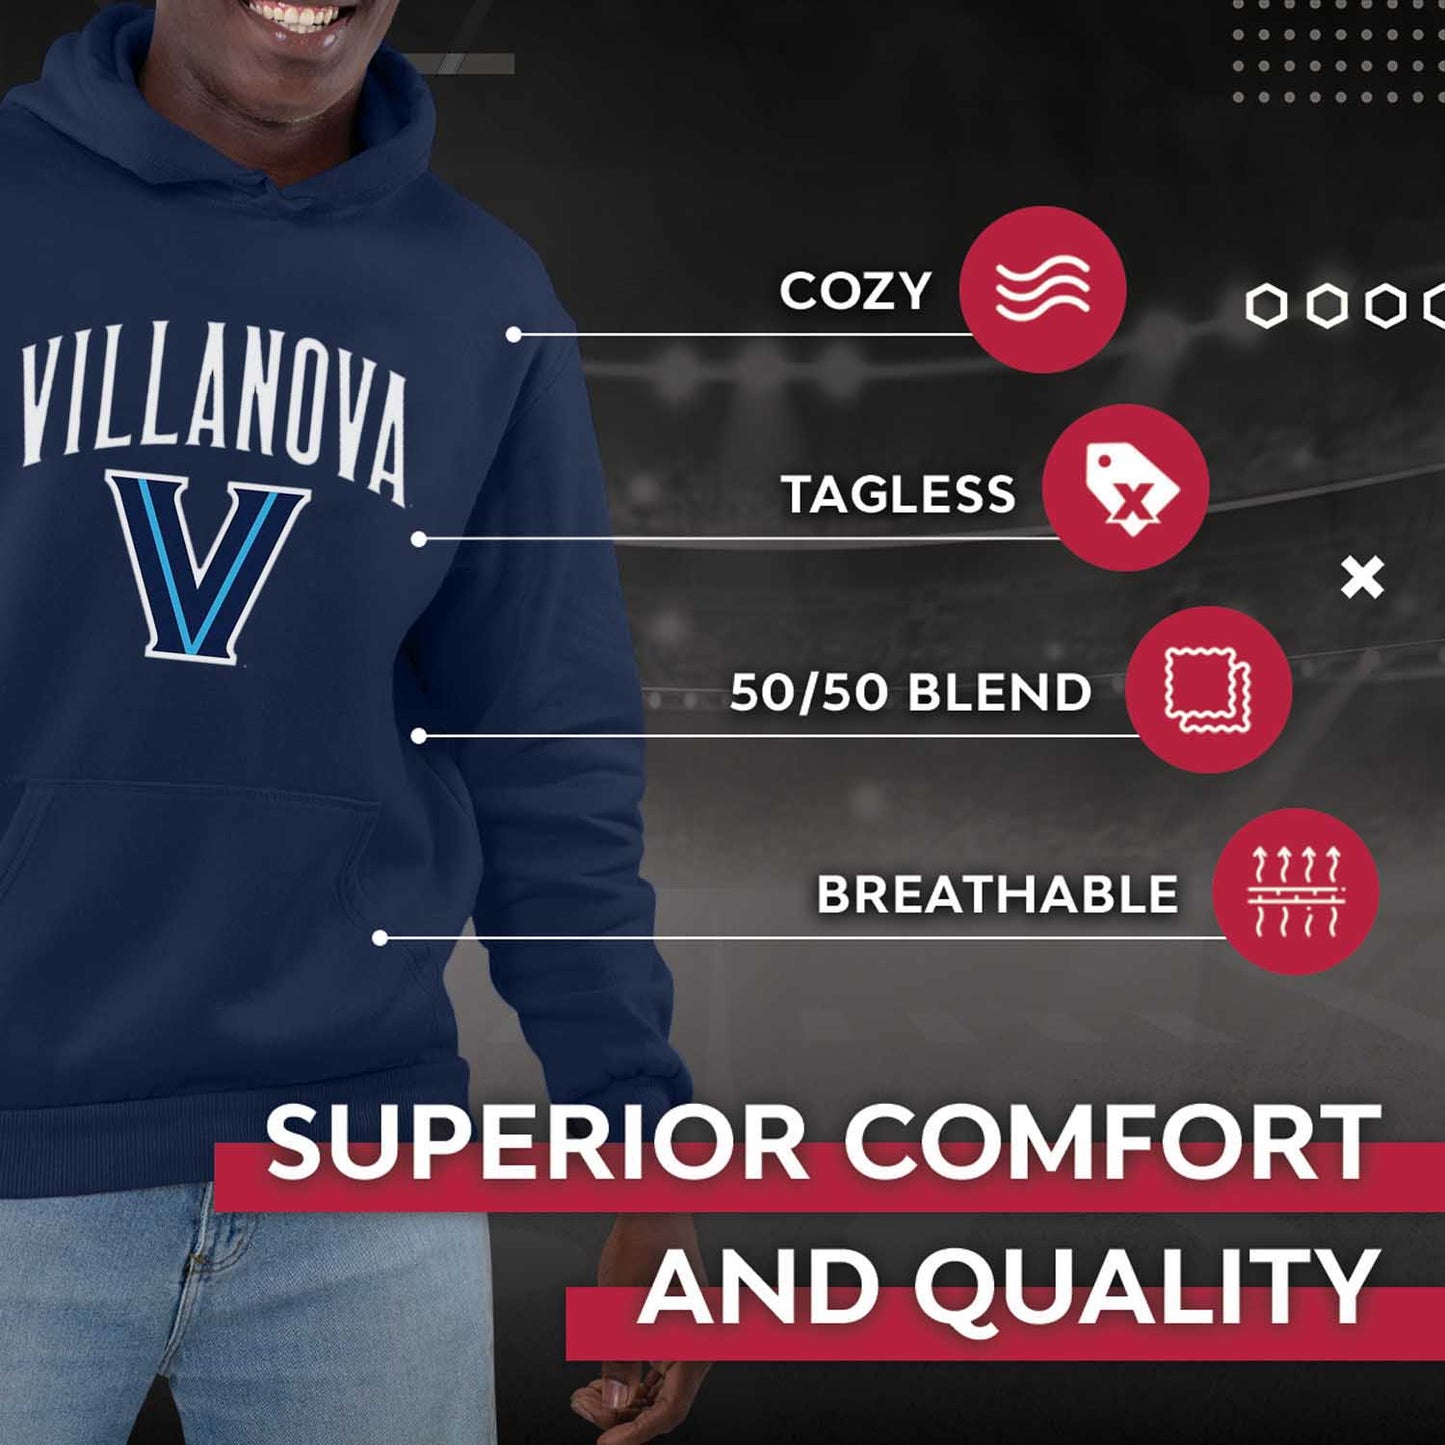 Villanova Wildcats Adult Arch & Logo Soft Style Gameday Hooded Sweatshirt - Navy